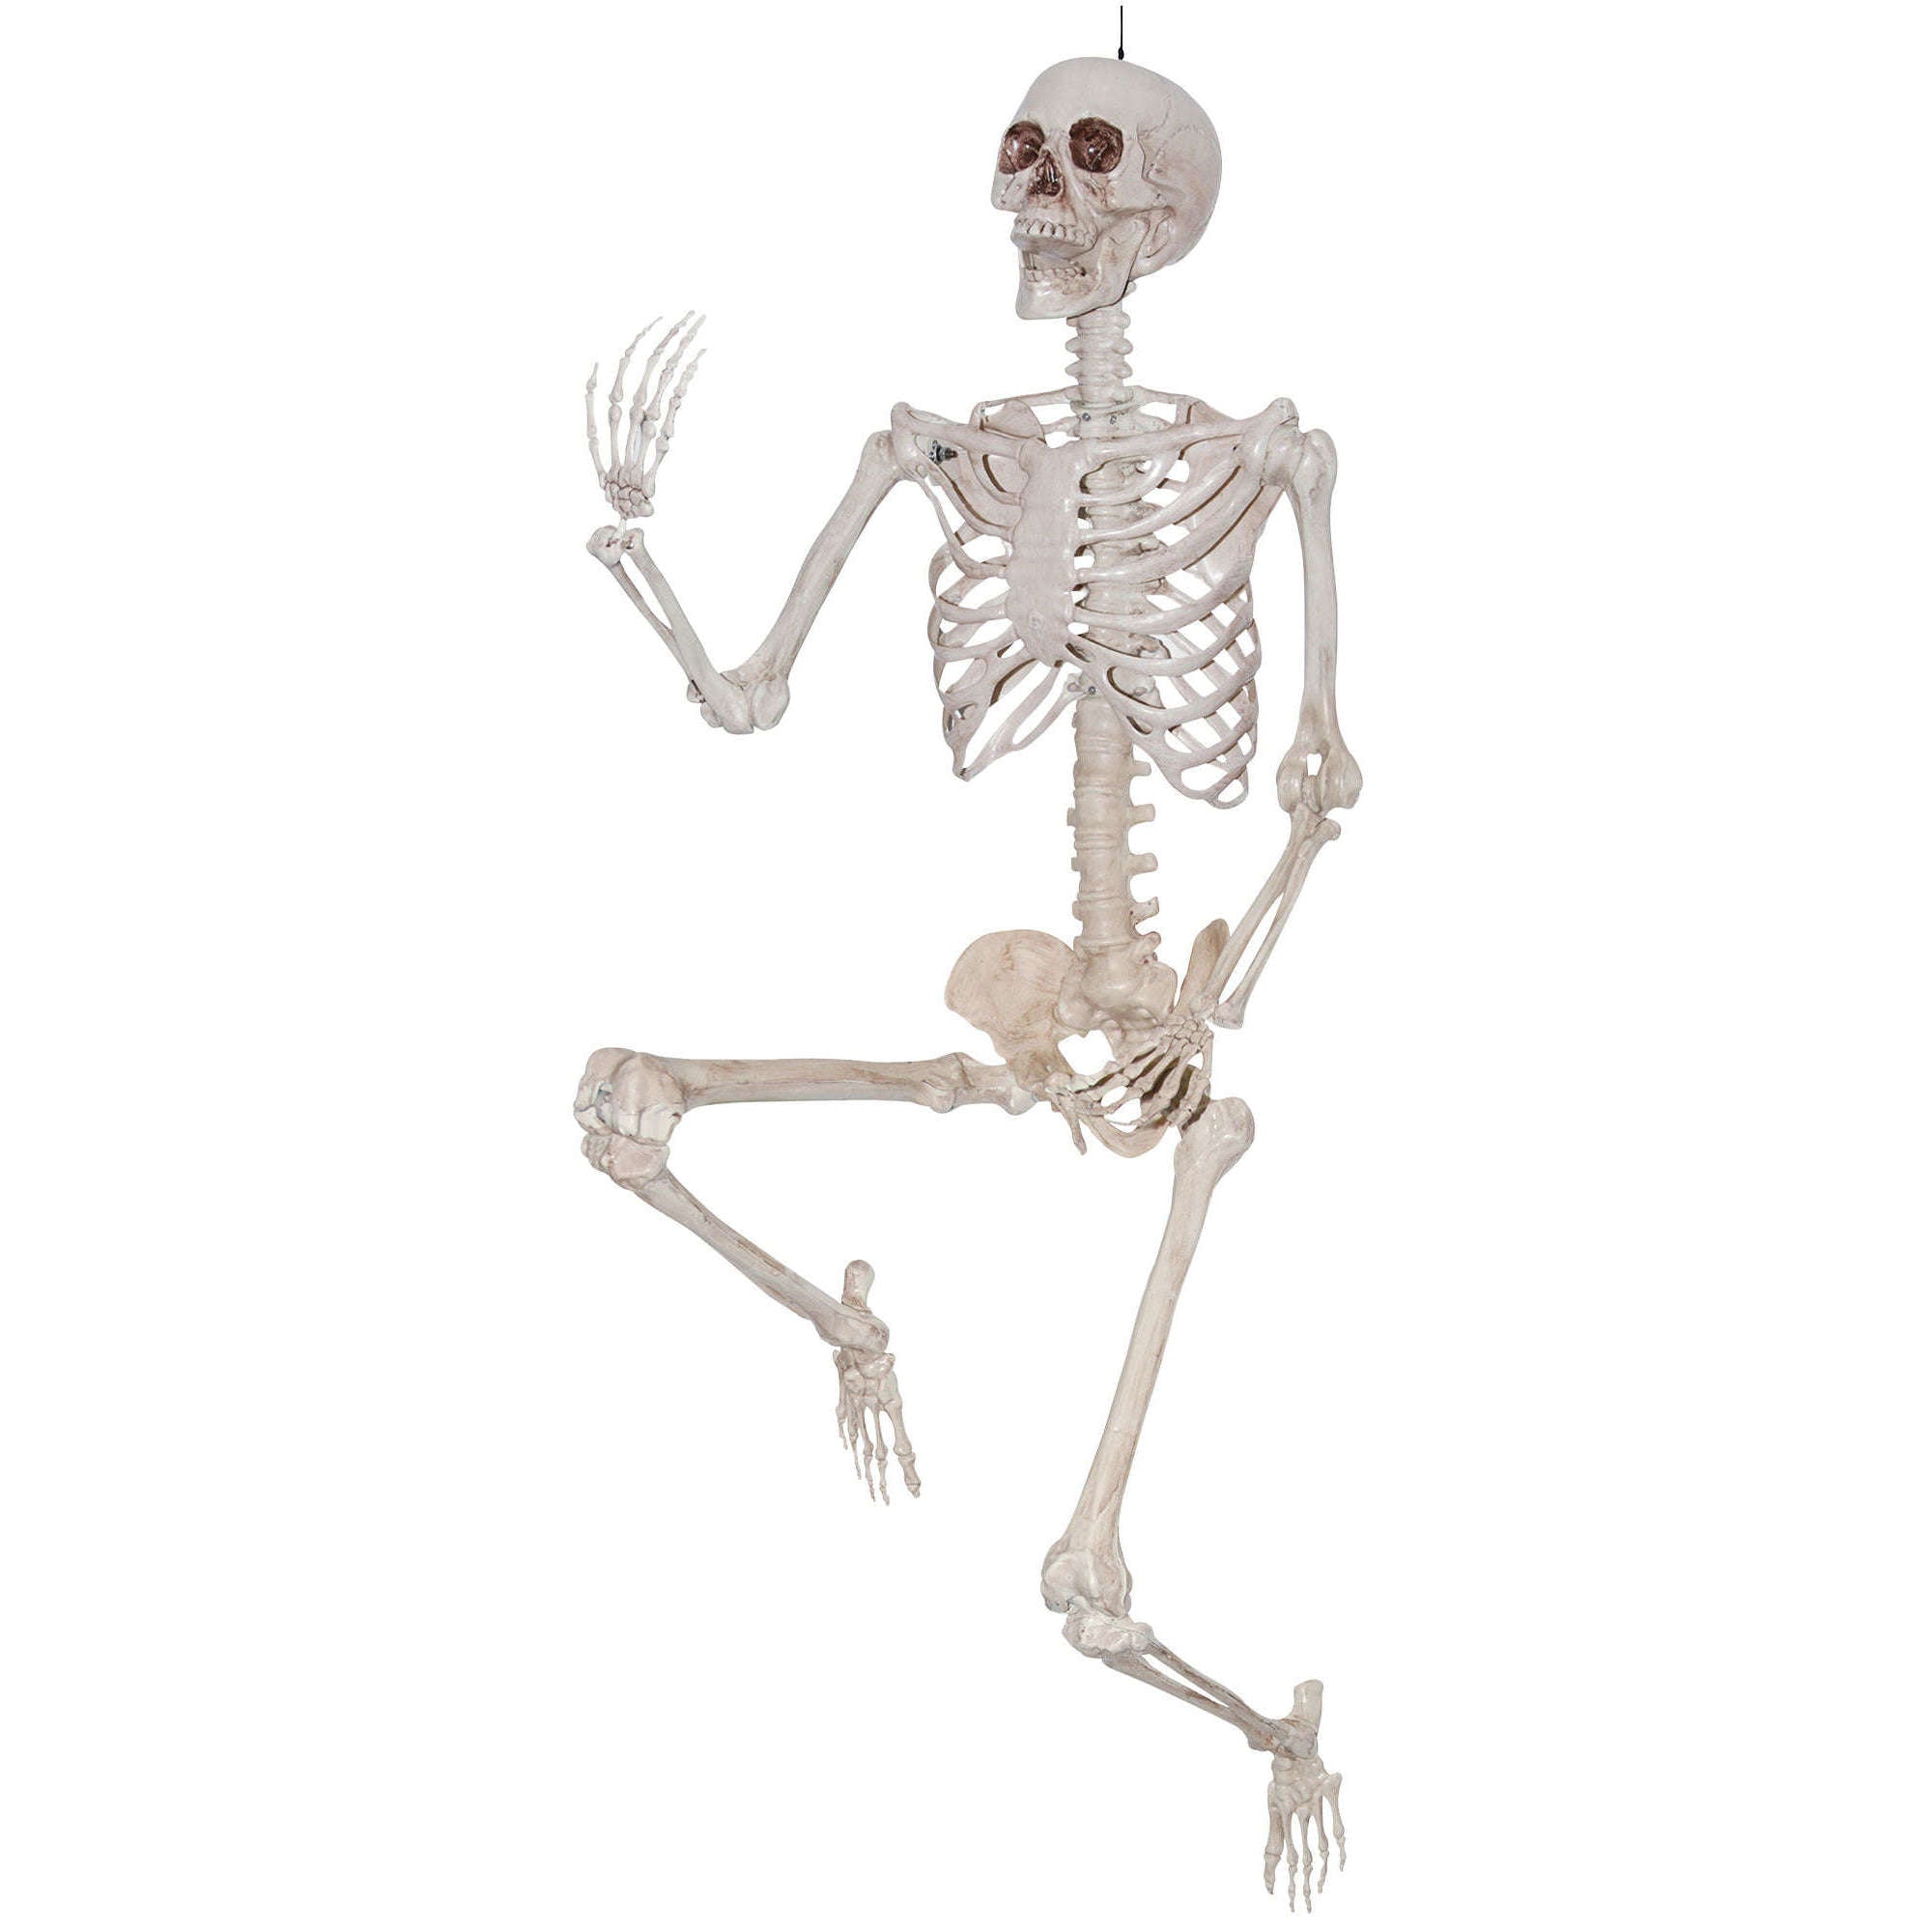 7ft Titan Skeleton Posable Decoration Prop